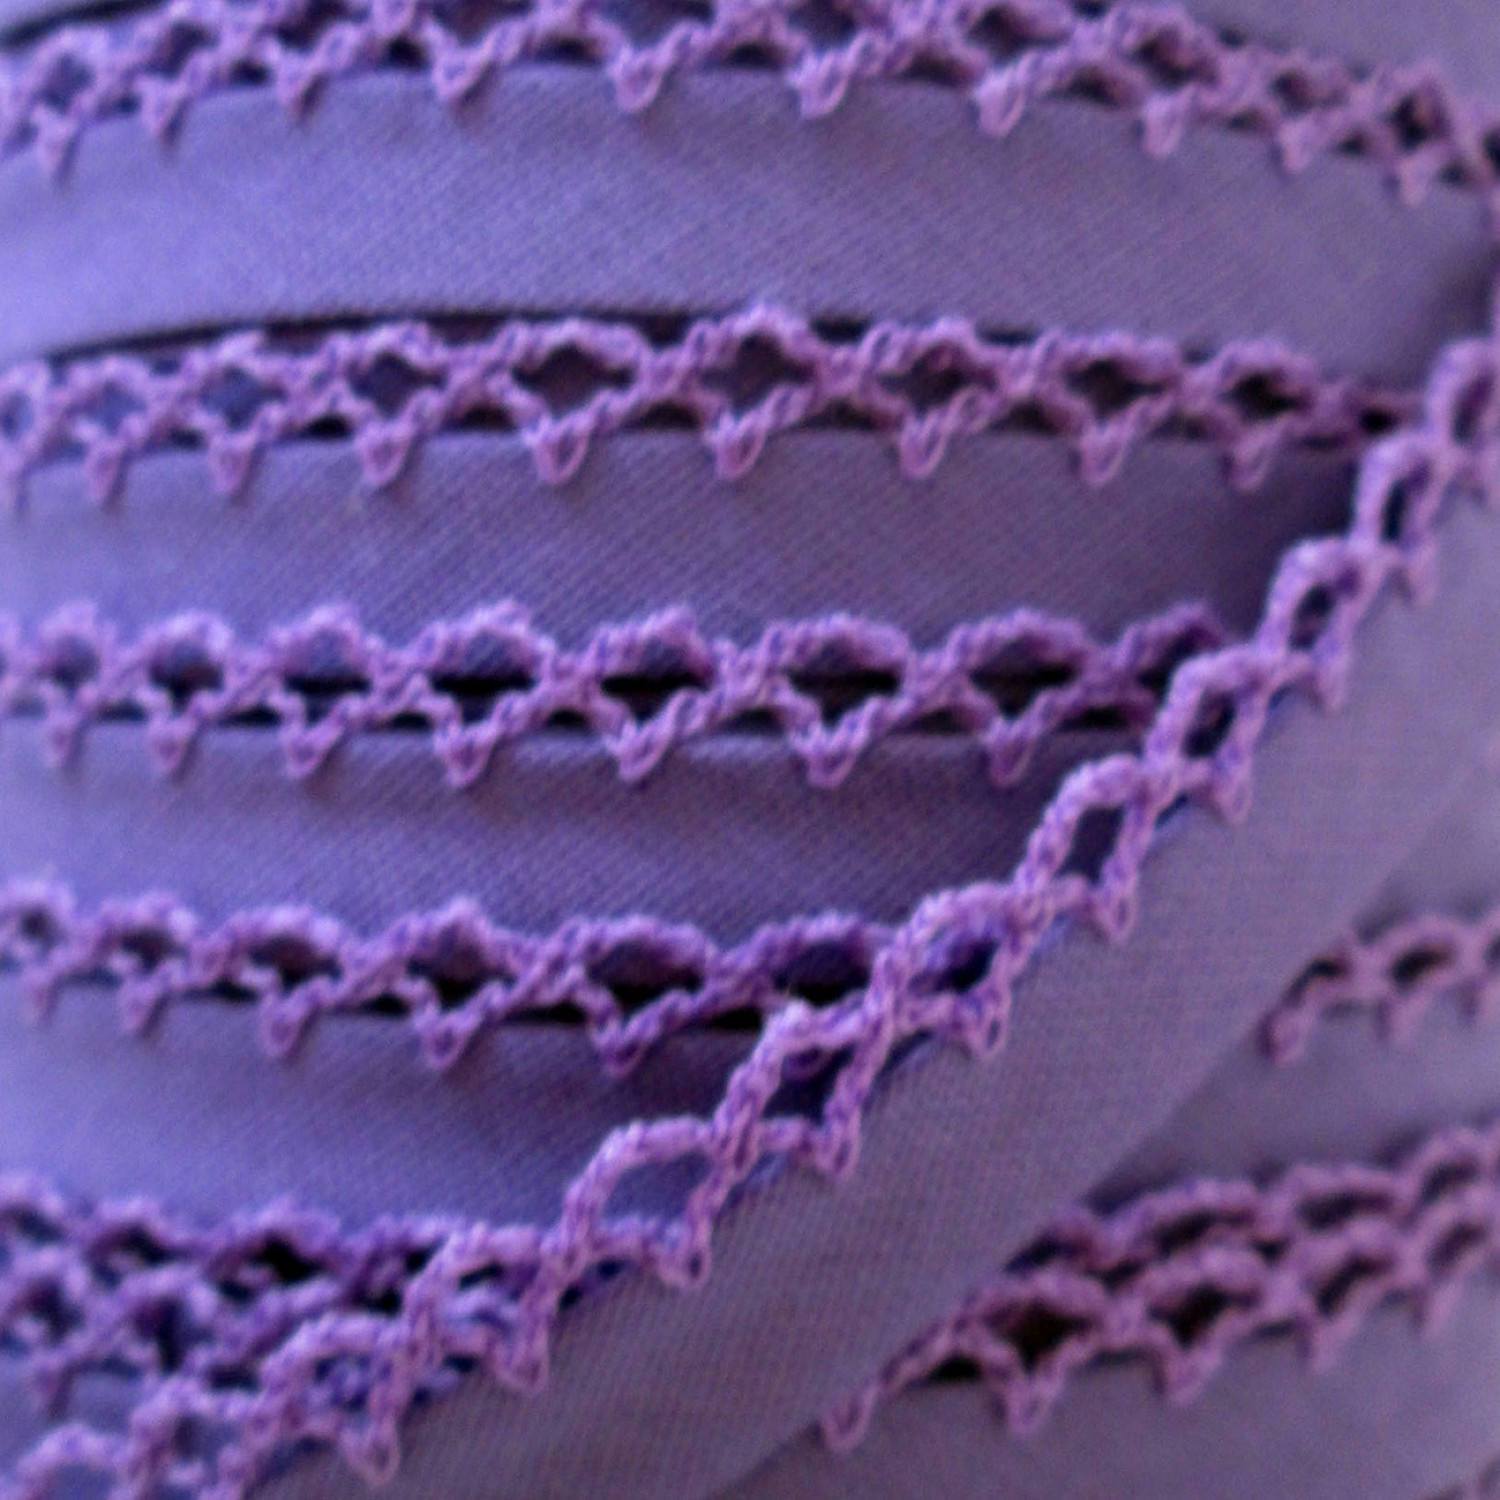 Purple Double Fold Bias Tape, Crochet Edge Bias Tape, Picot Edge, Quilt Binding, AMETHYST Crochet Bias Tape, By the Yard, Purple Lace, Trim